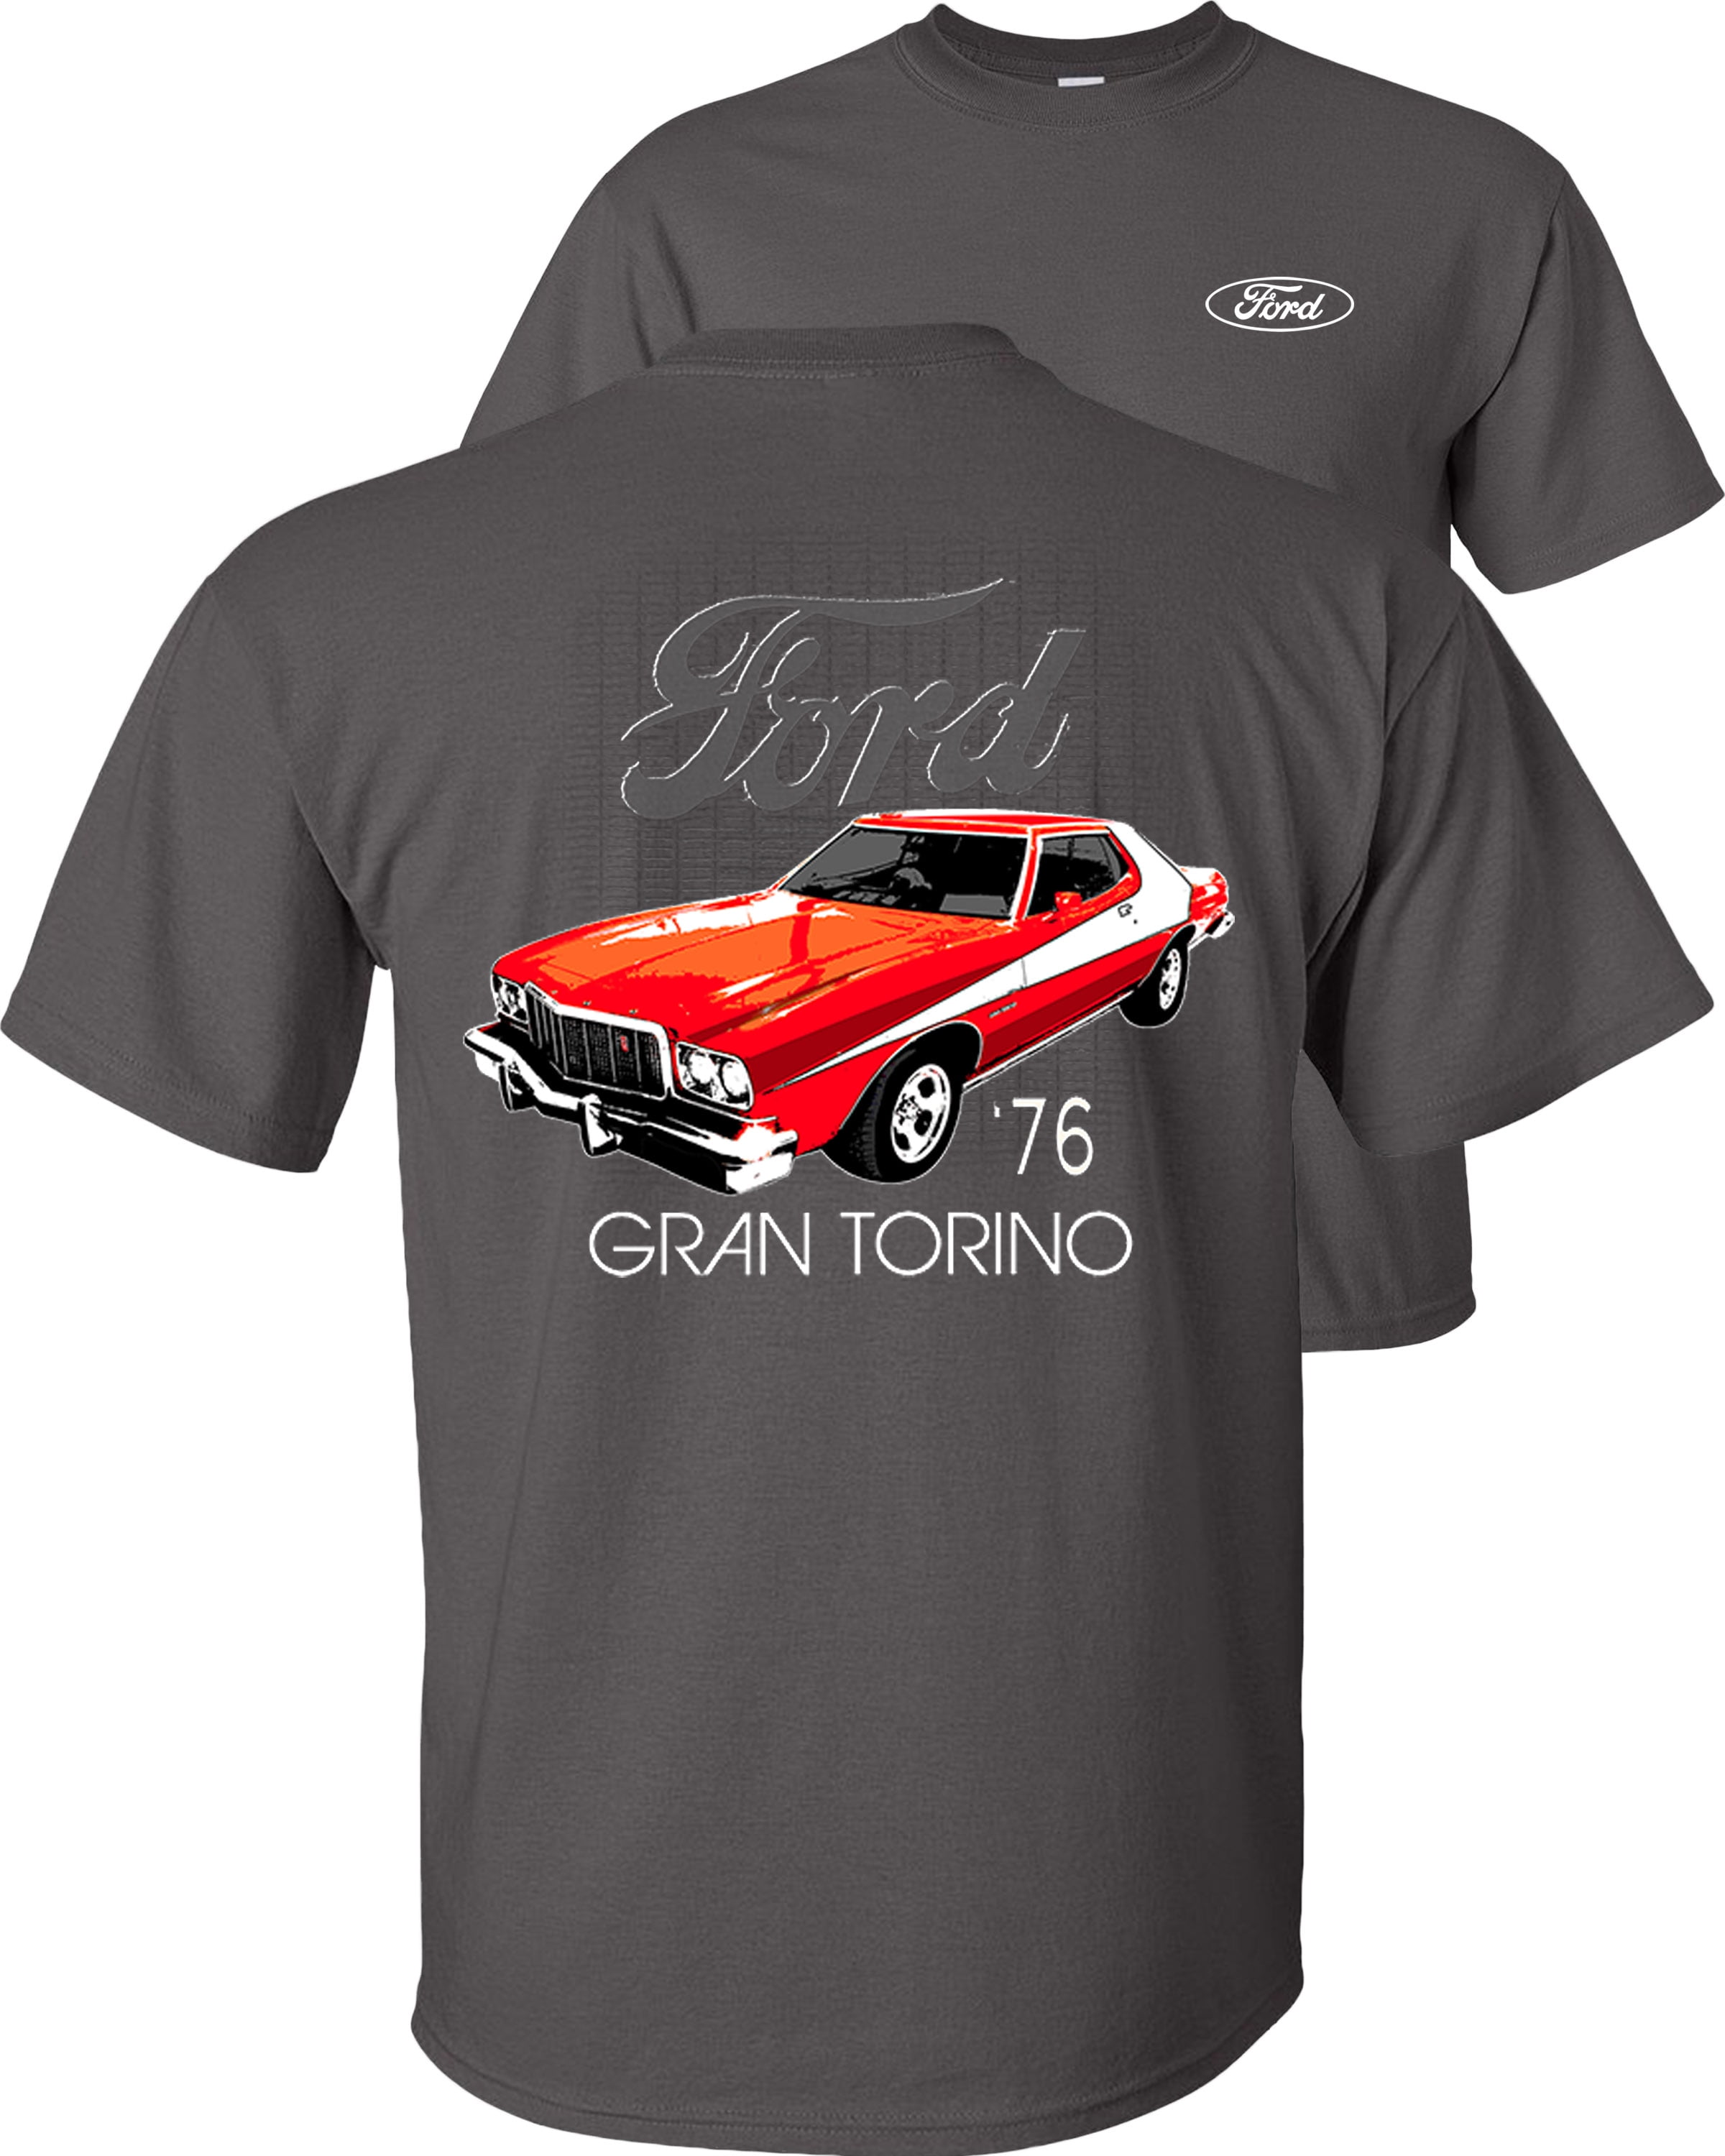 torino shirt